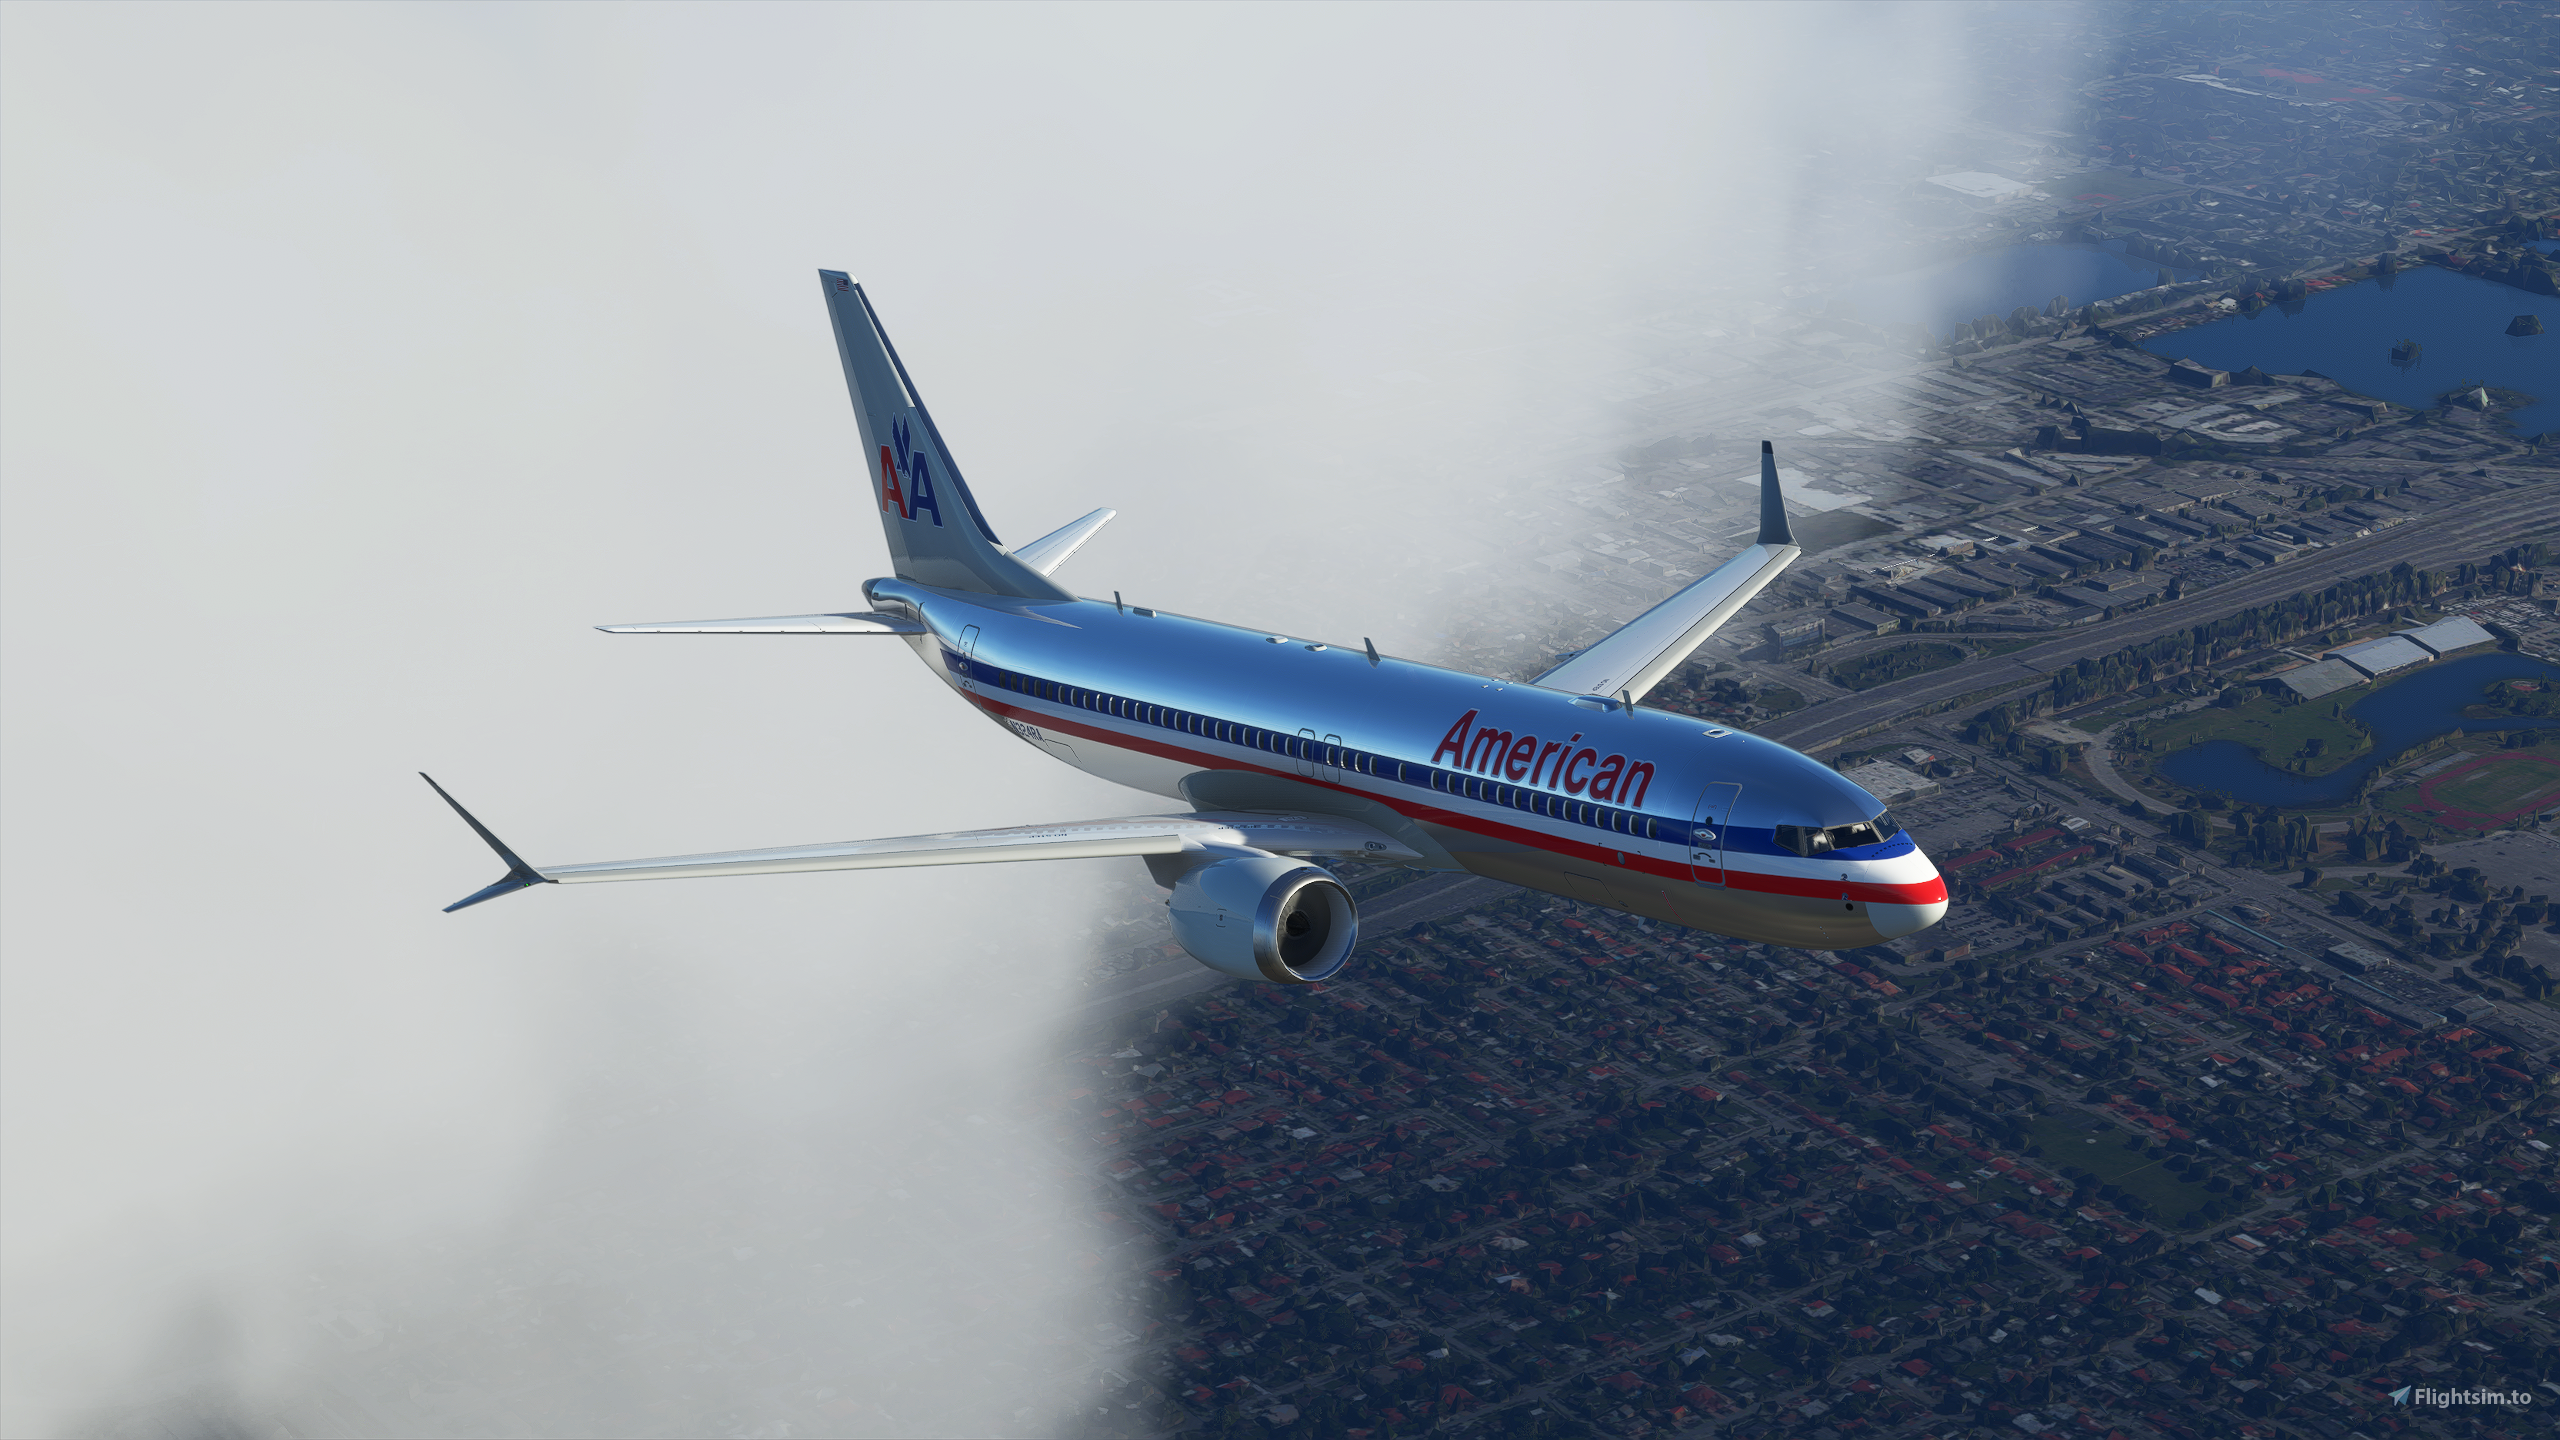 pmdg 737 american airlines